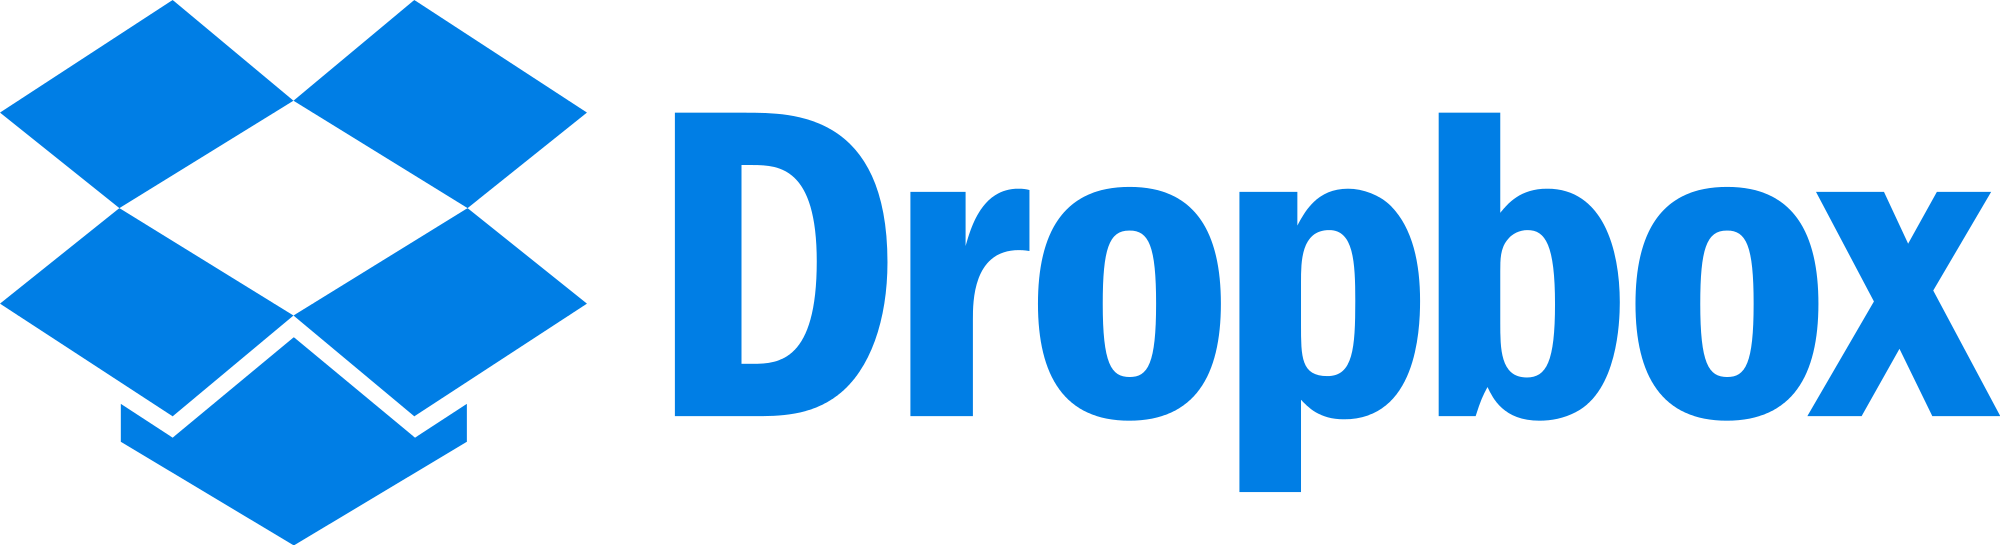 Dropbox technology partner